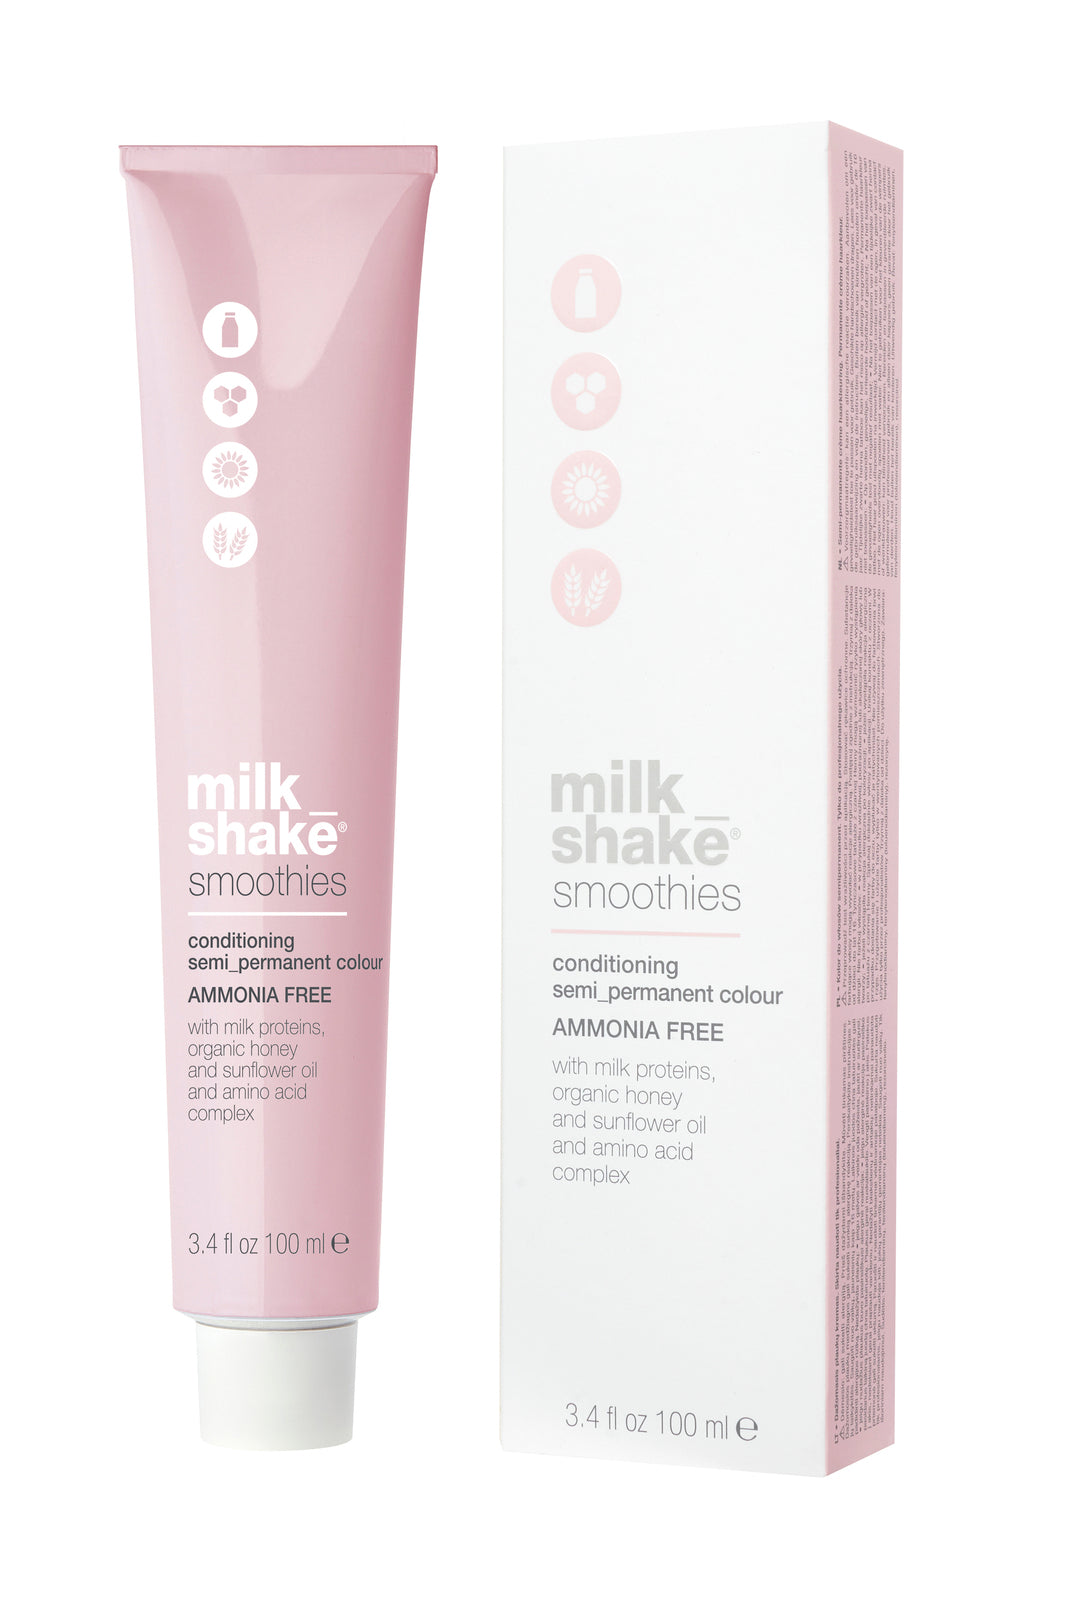 Milkshake smoothies semi-permanent color 6